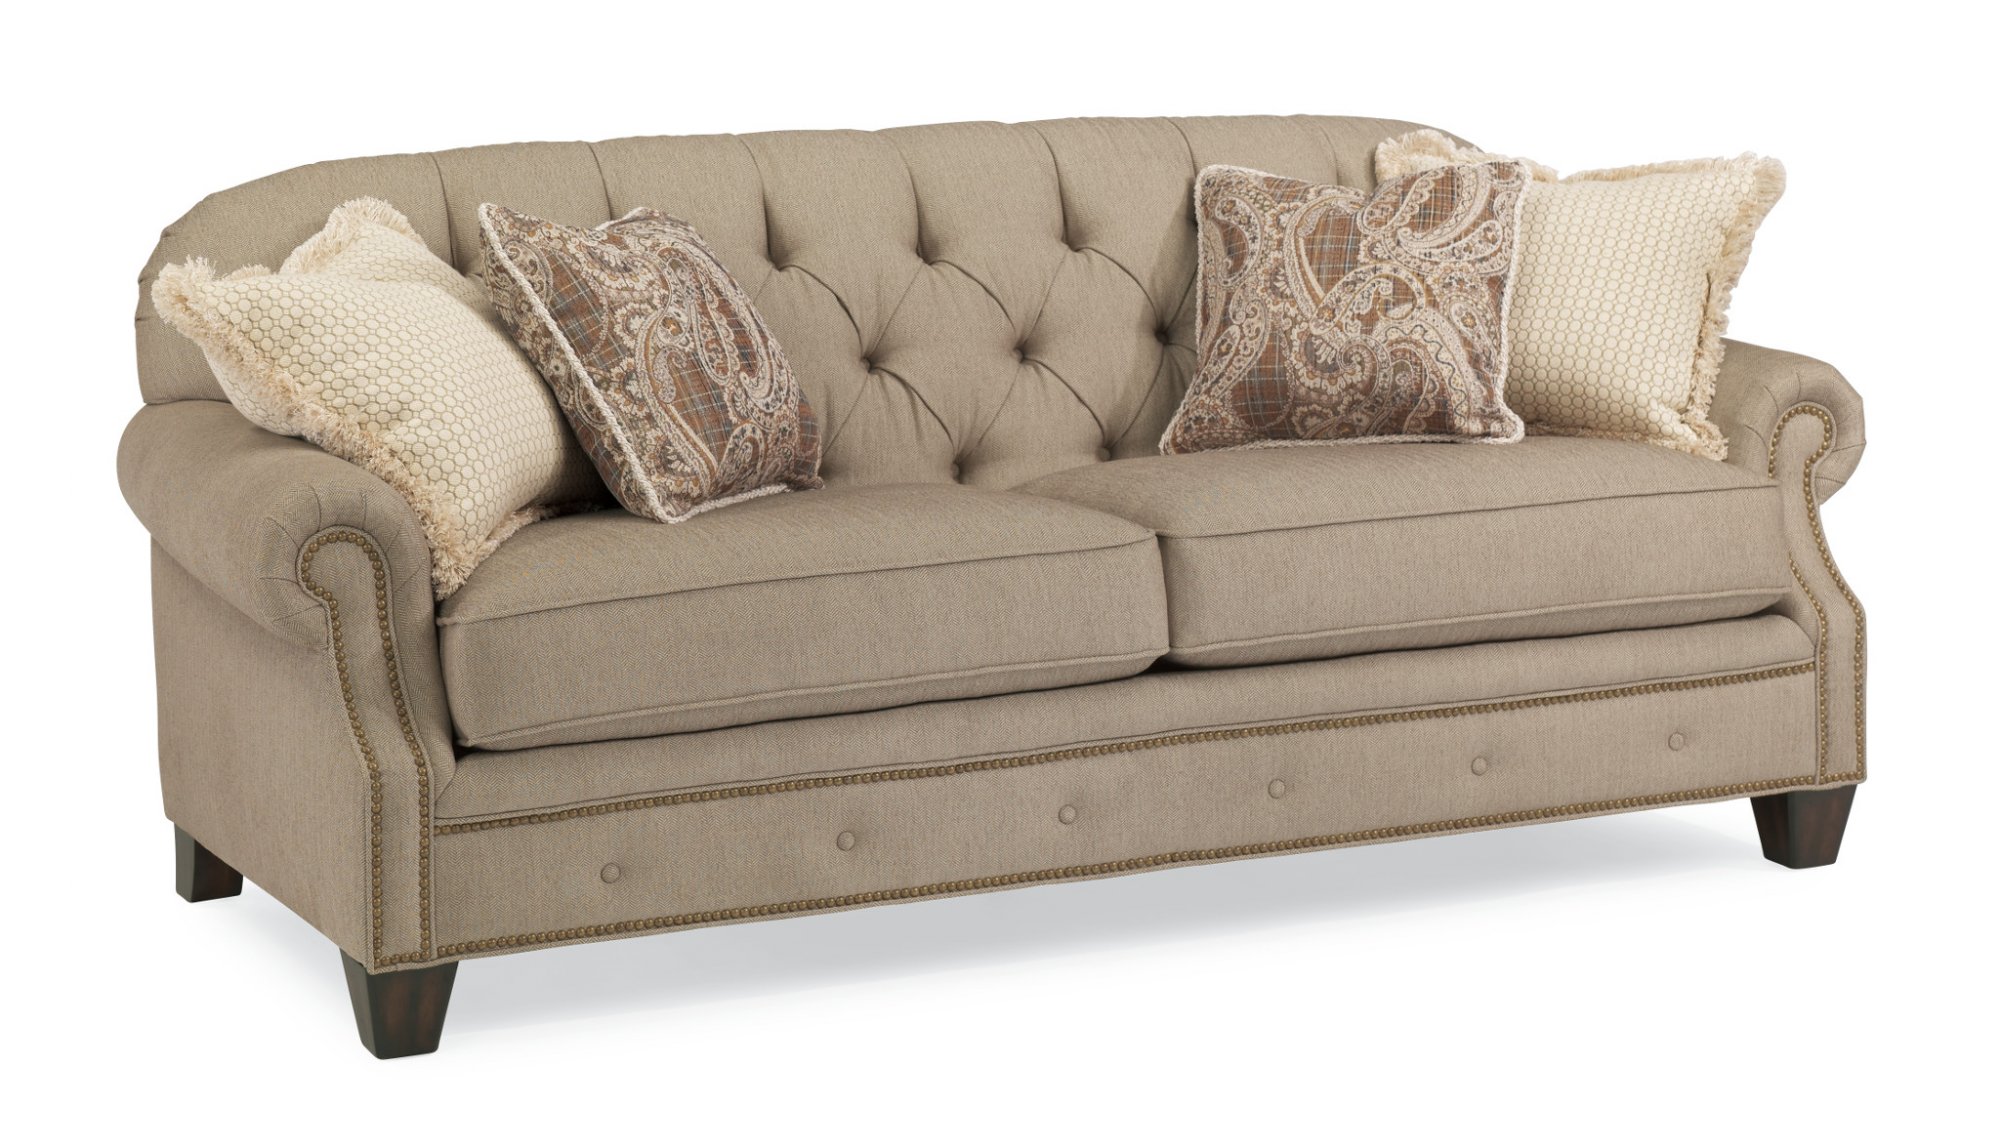 flexsteel sofa share via email download a high-resolution image JQPXFXV